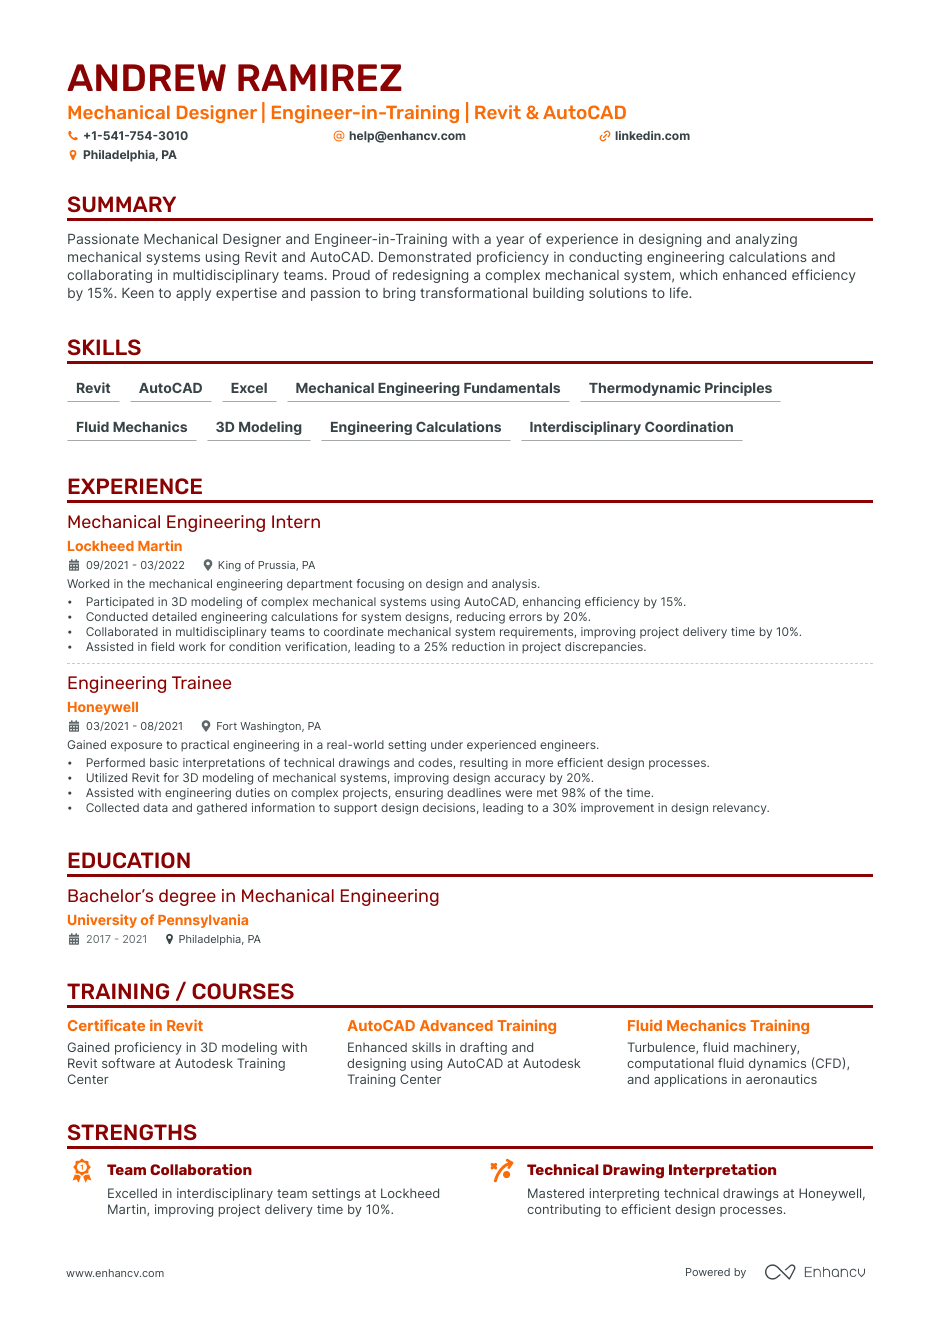 Engineer-in-Training resume example